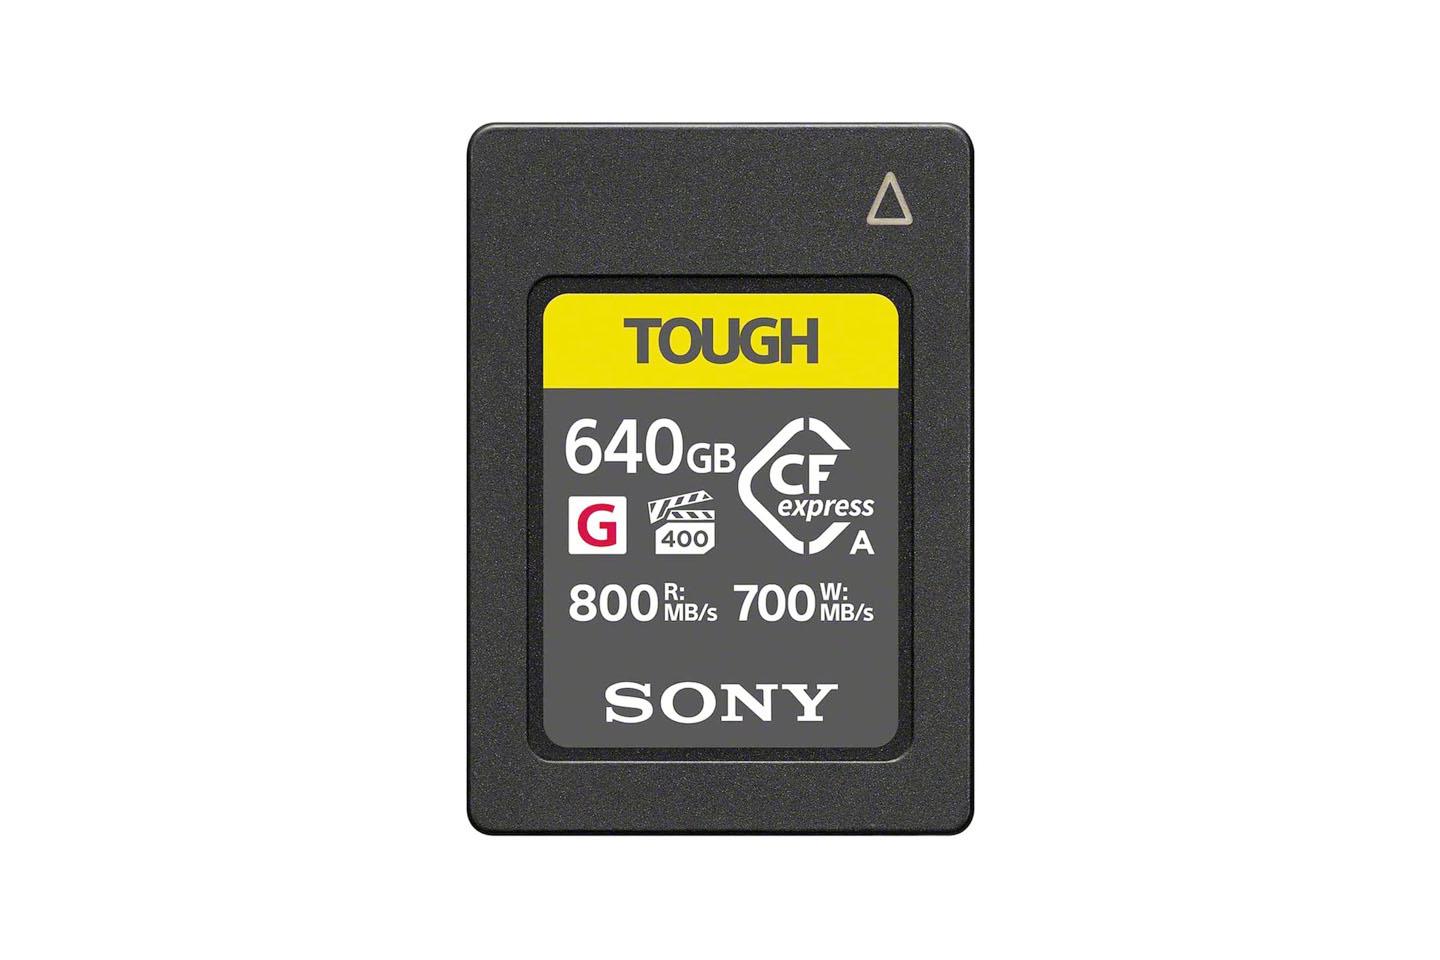 CFexpressTypeAカード640GB(SONY Tough G)